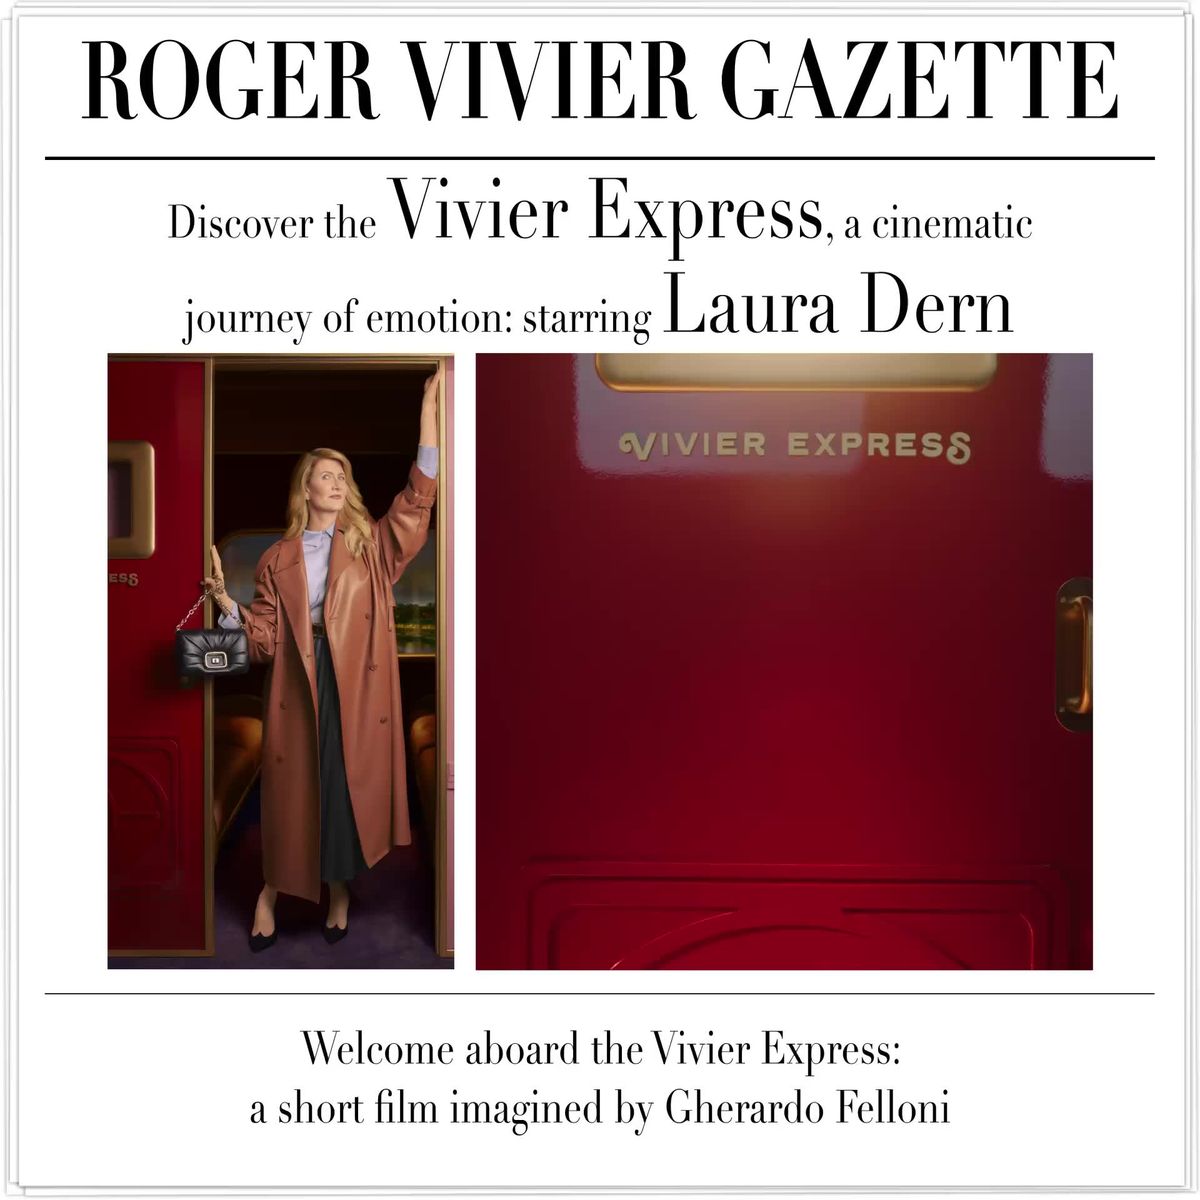 preview for Roger Vivier gazette